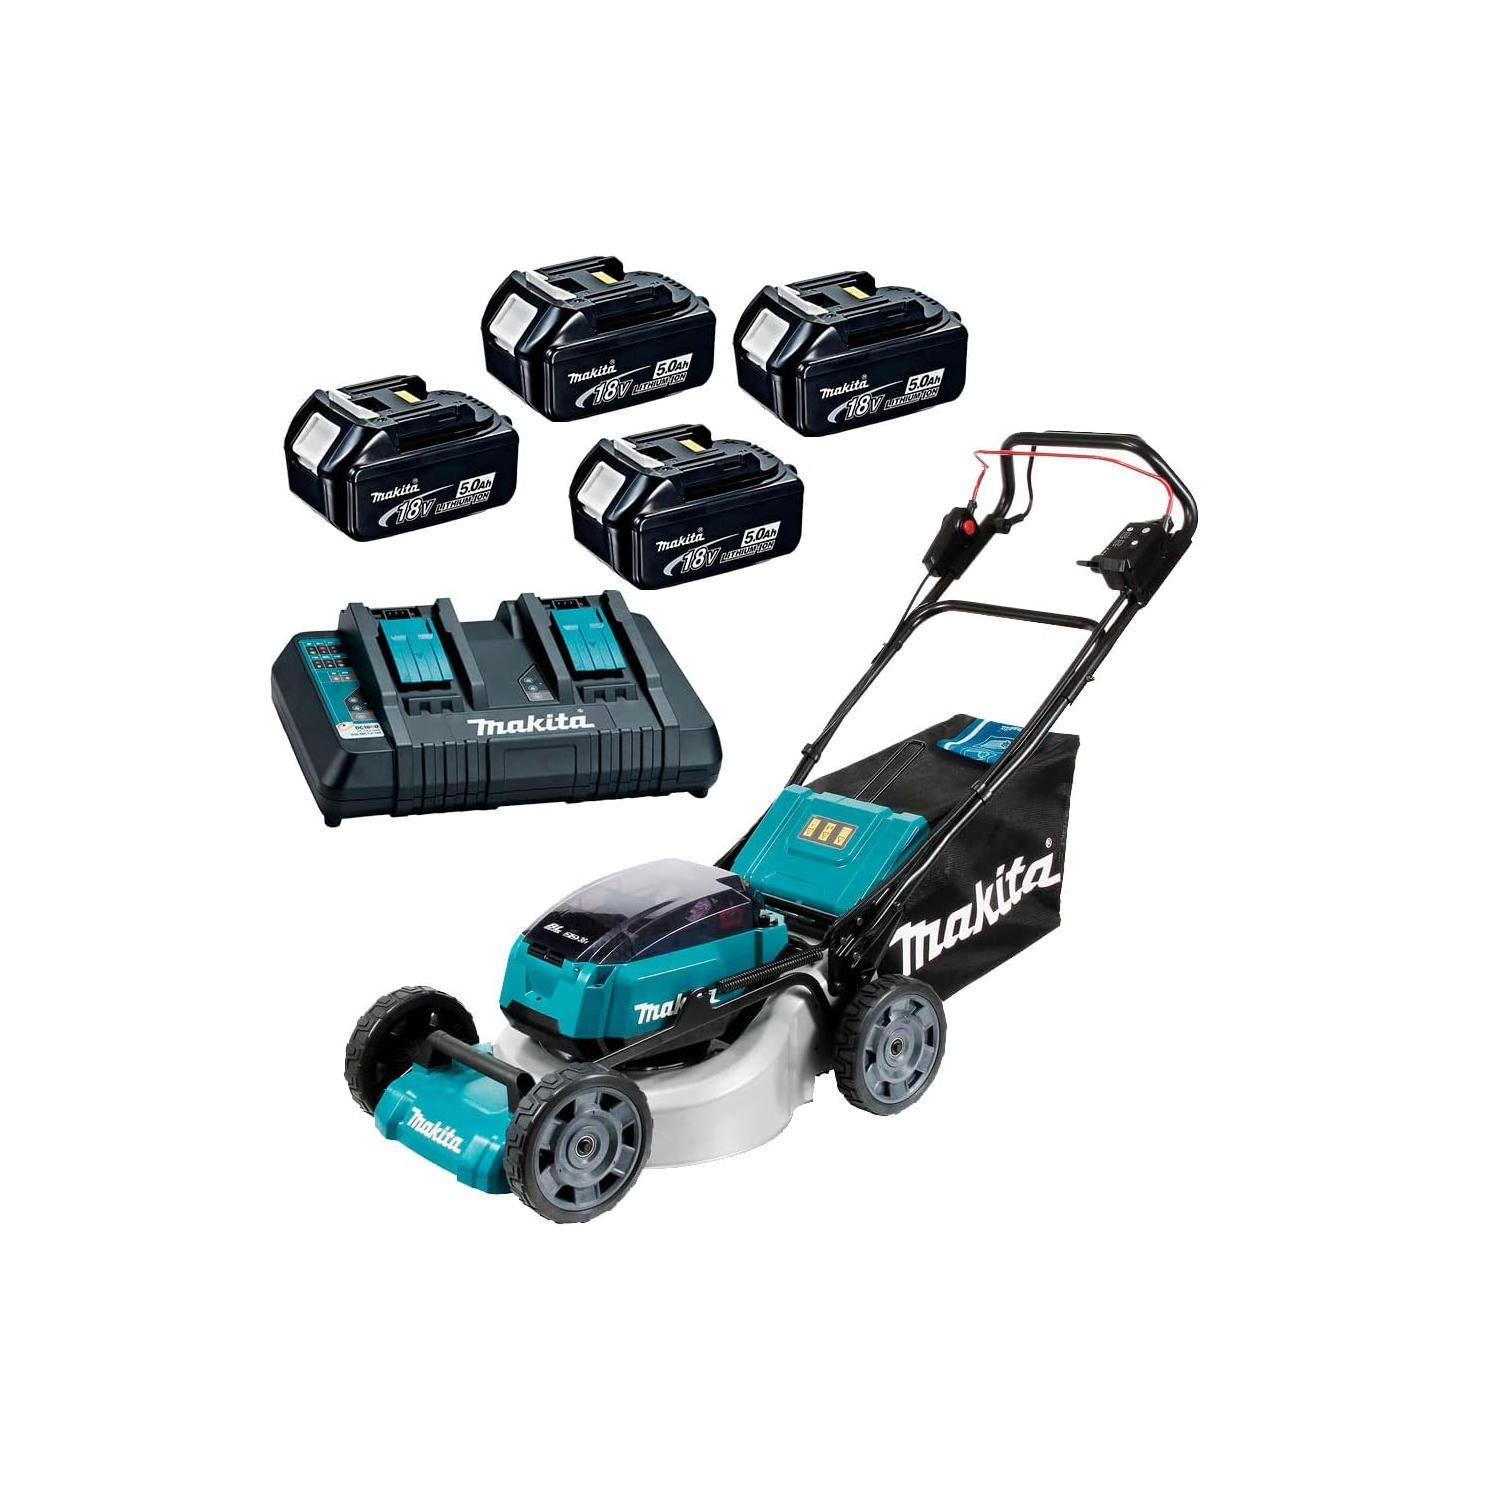 Makita dlm462pt4 18vx2 4×5.0ah lxt brushless lawn mower kit